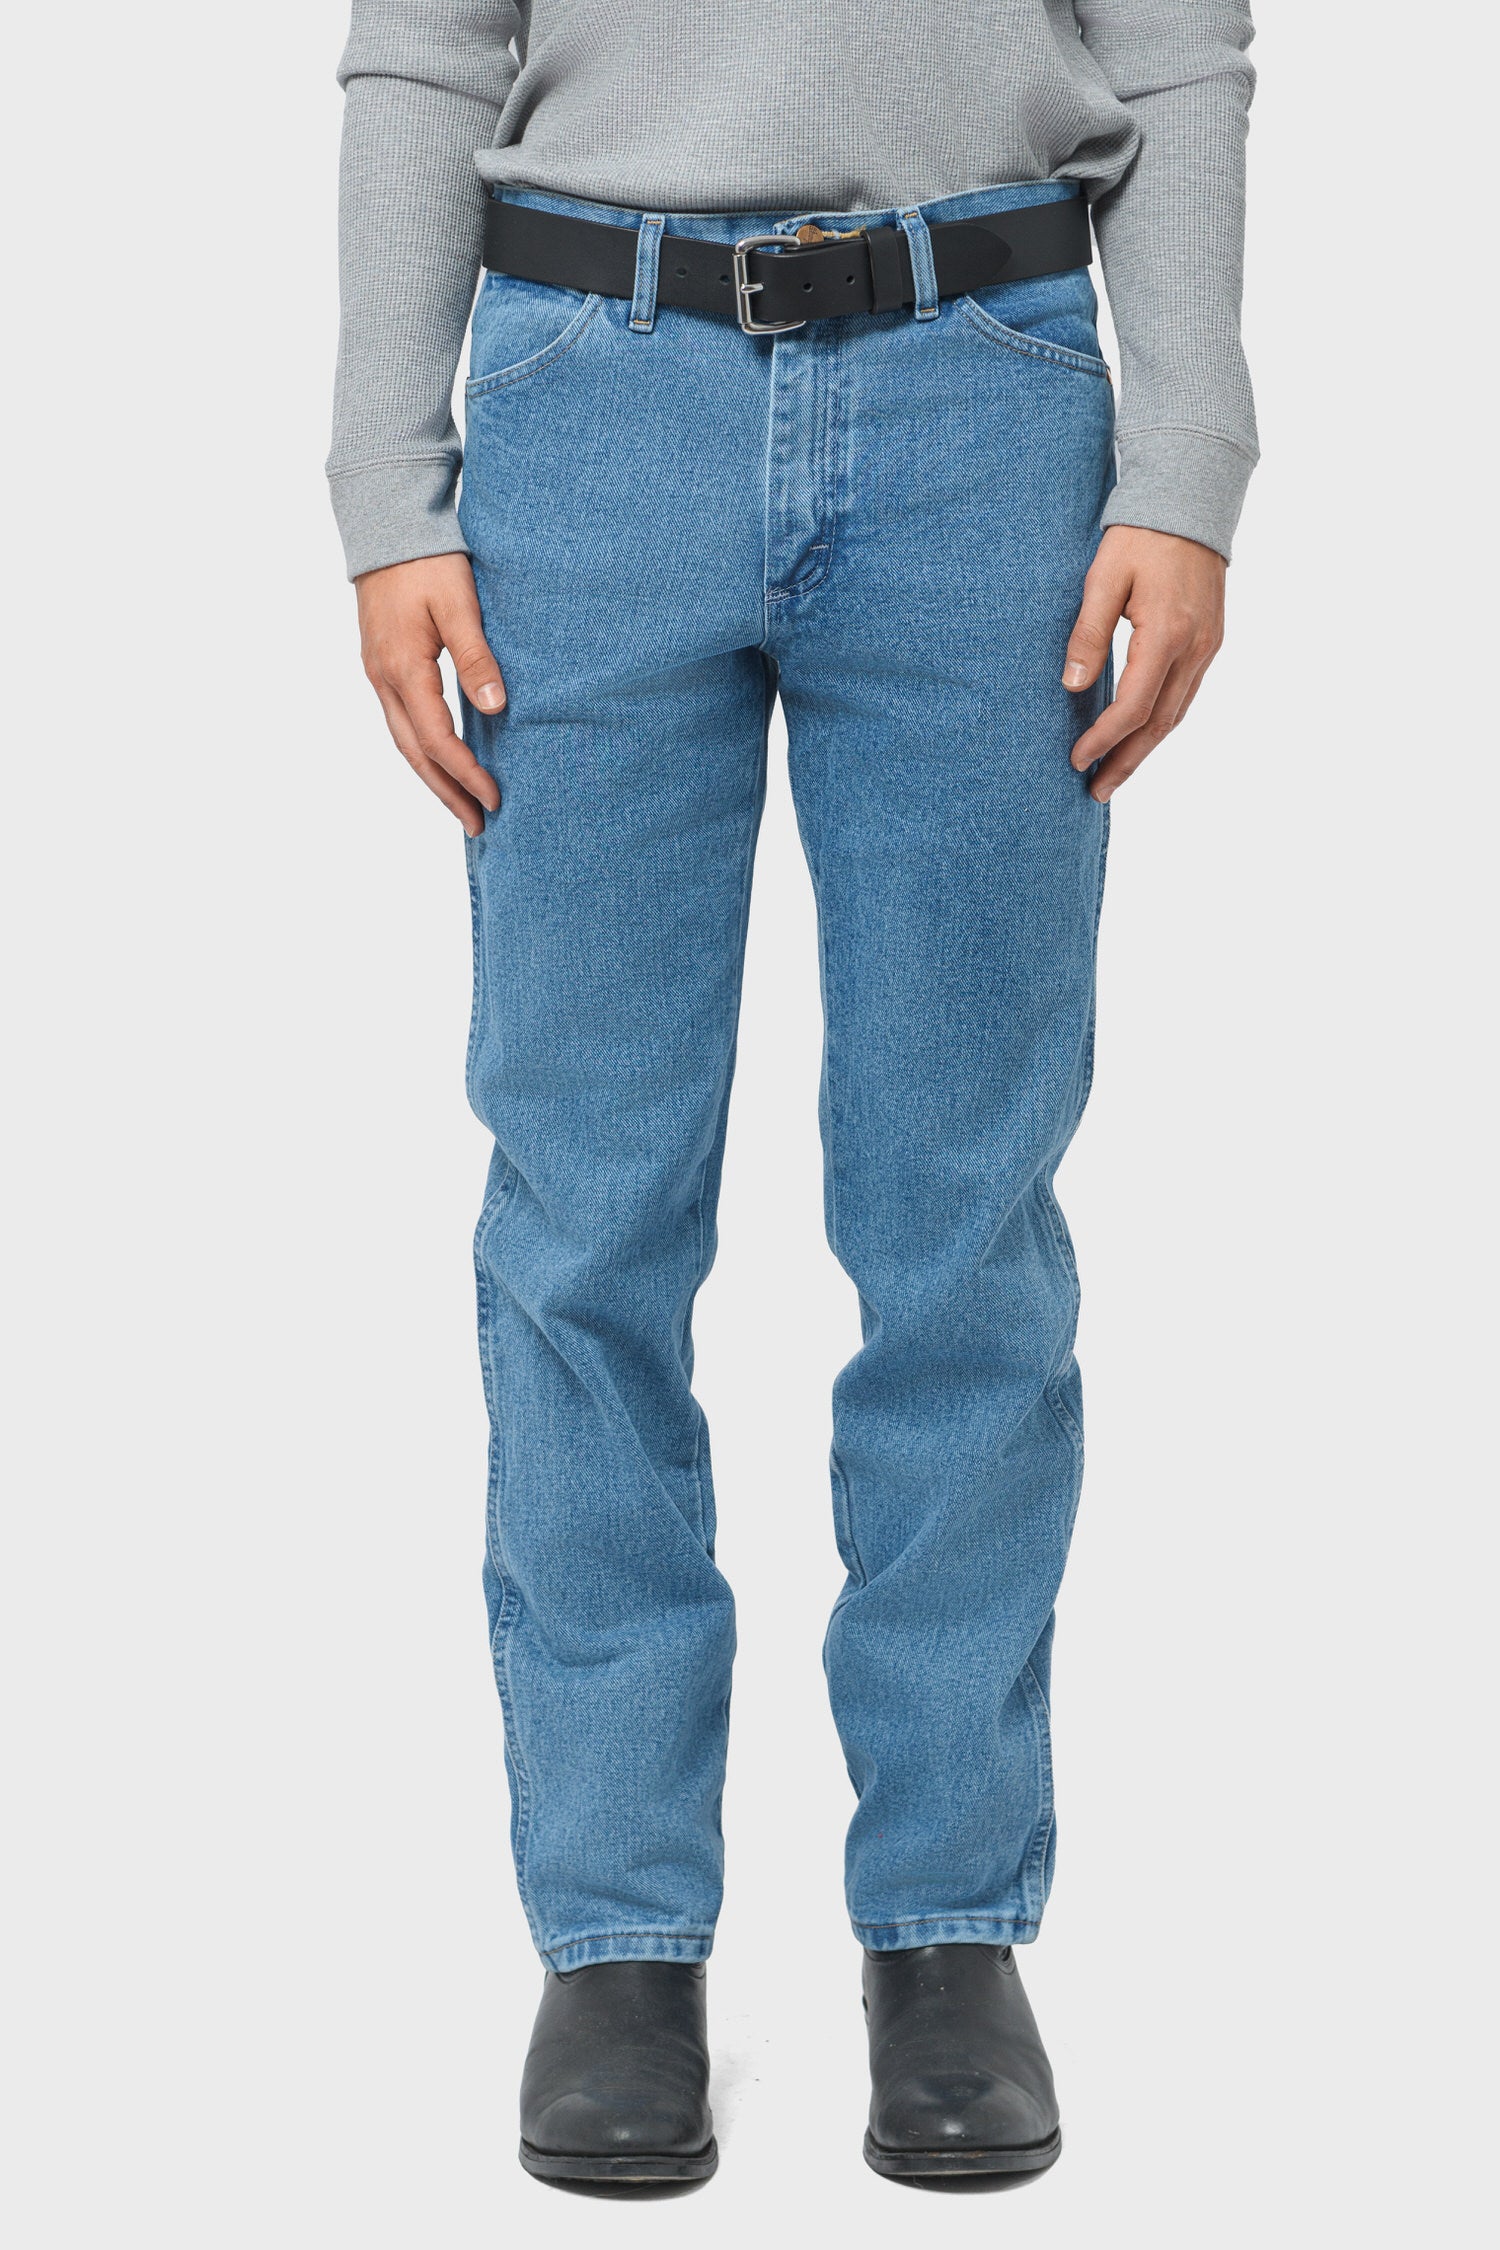 Men's Wrangler Cowboy Cut Slim Fit Jean in Antique Wash